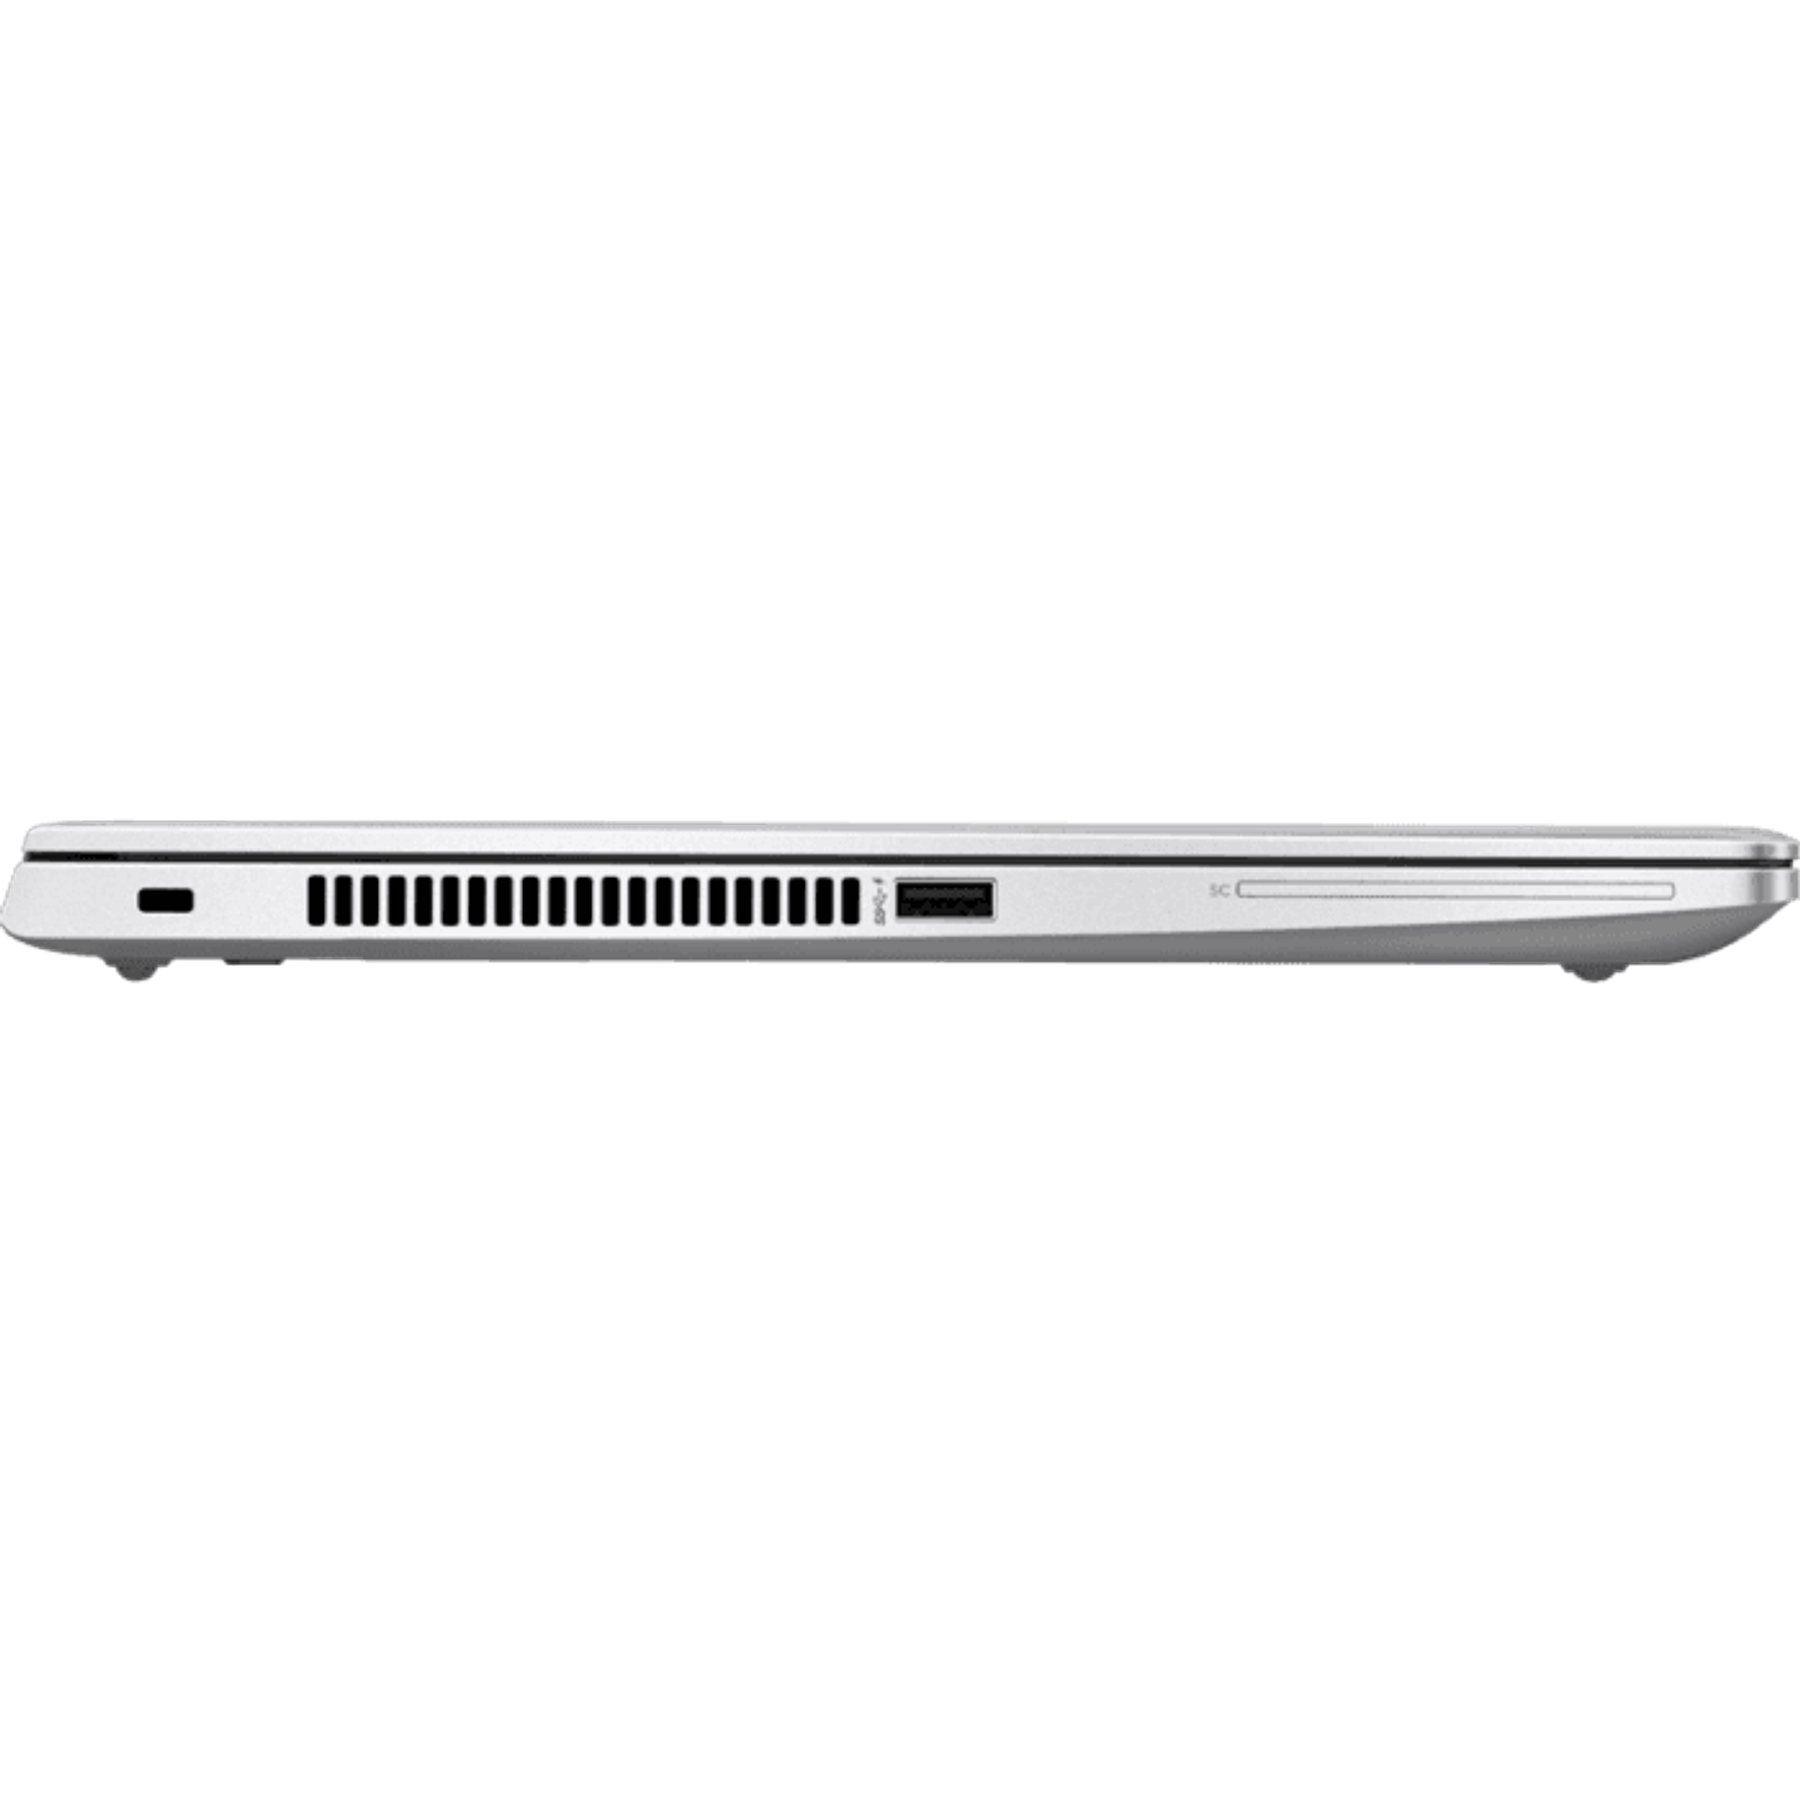 HP Notebook EliteBook 830 G6